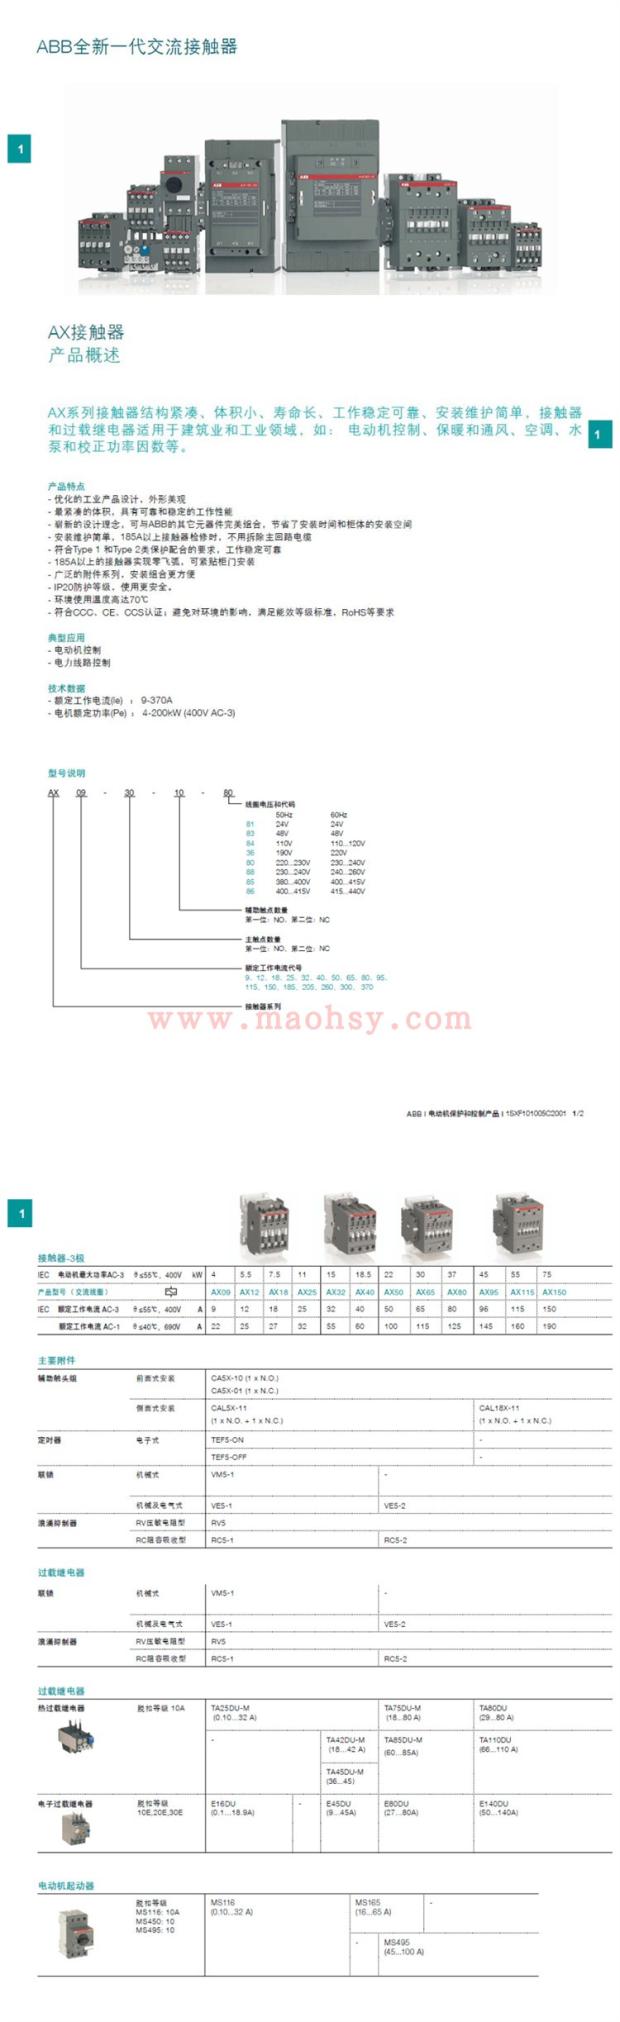 ABB-AX09-30-10-80*220-230V 50Hz/230-240V60Hz-3极接触器 报价 接触器产品特点,通用型接触器,ABB AX系列